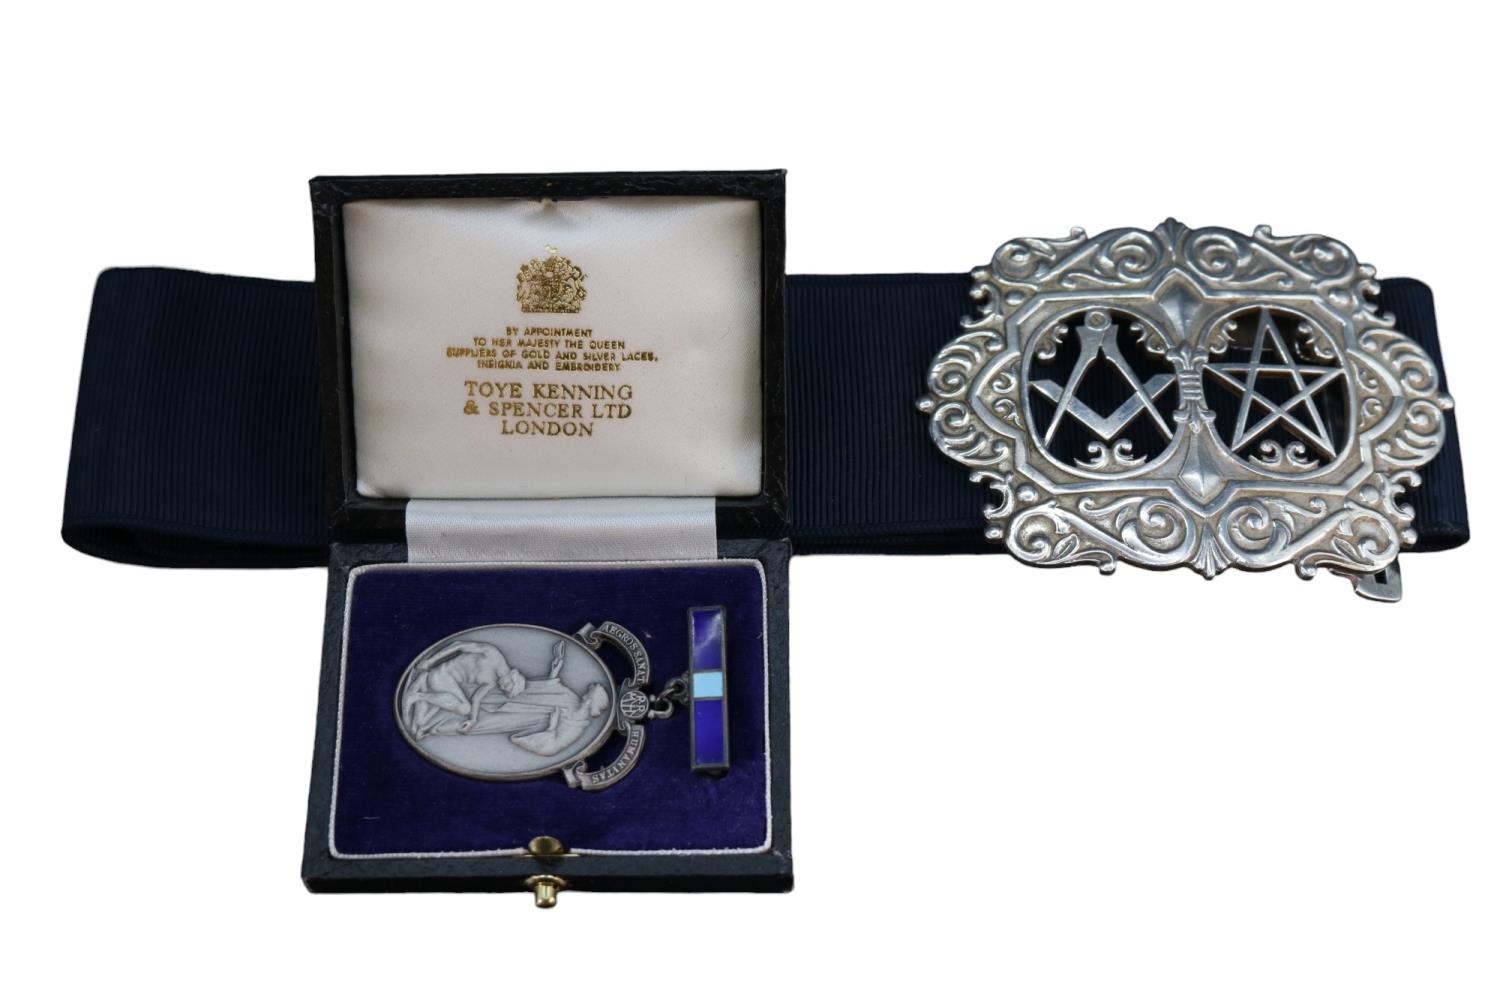 Royal Masonic Hospital nurses belt buckle and nurses silver Jewel Badge with enamelled bar. Both